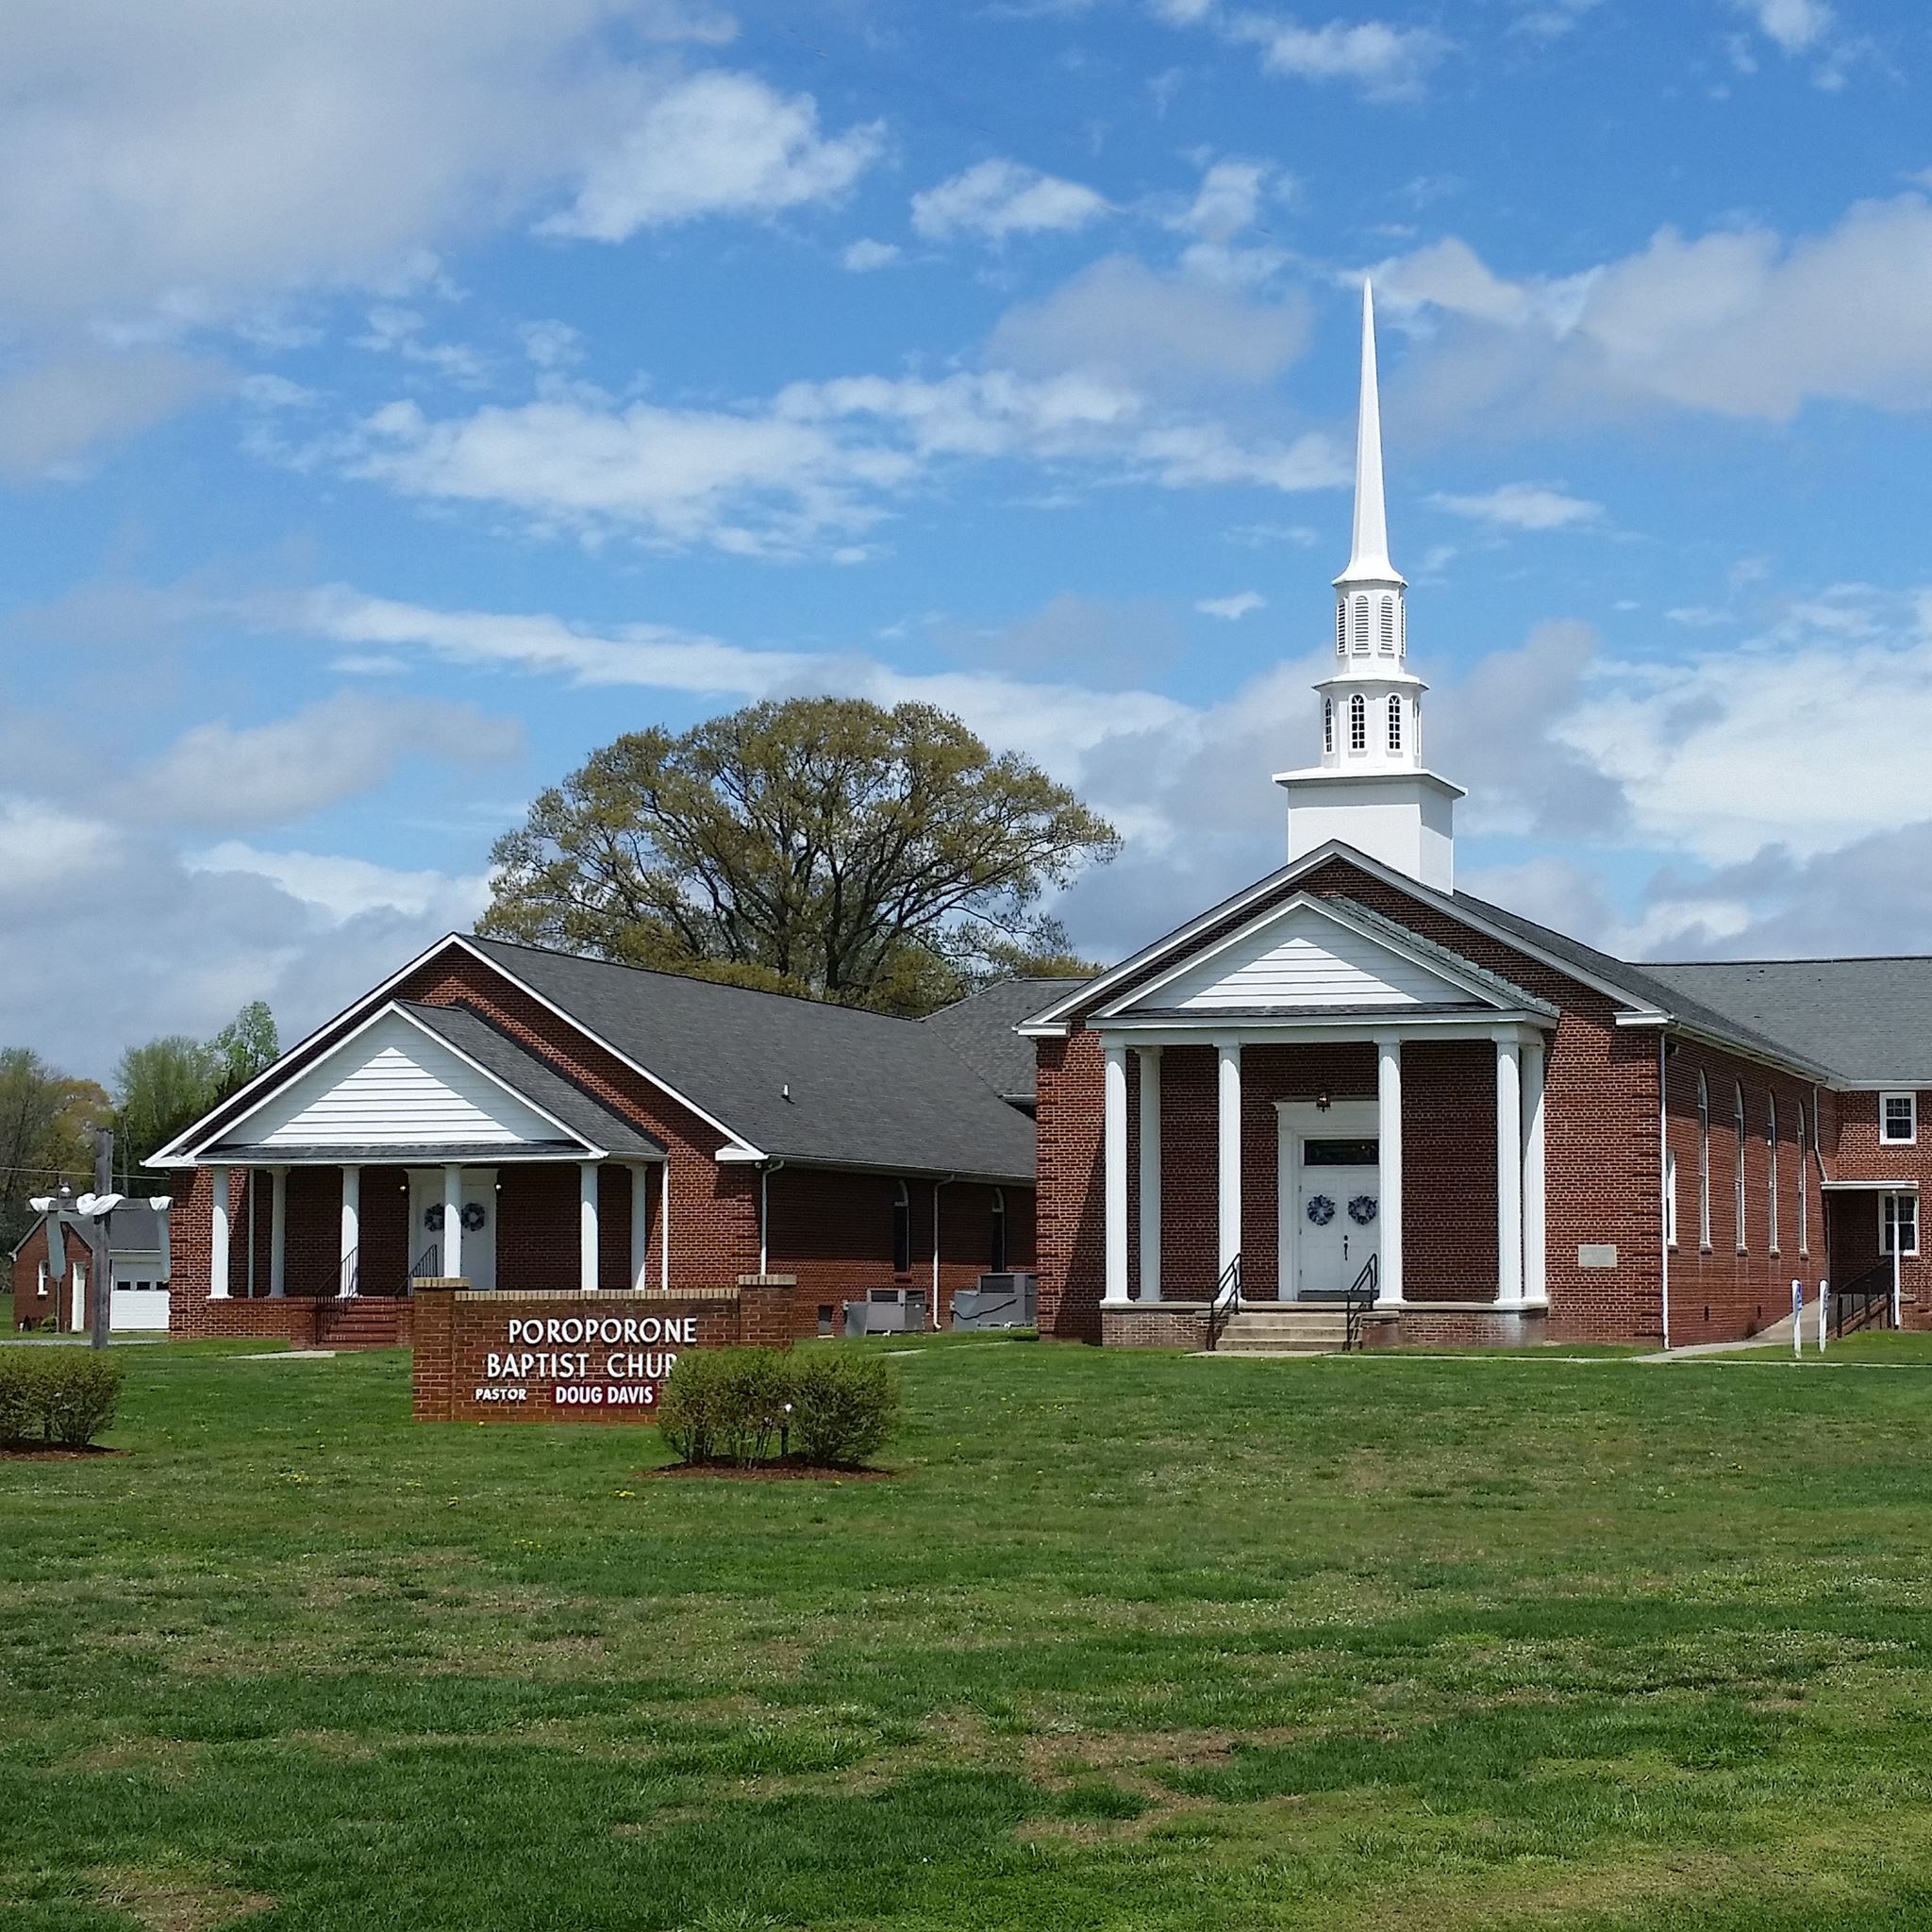 Poroporone Baptist Church